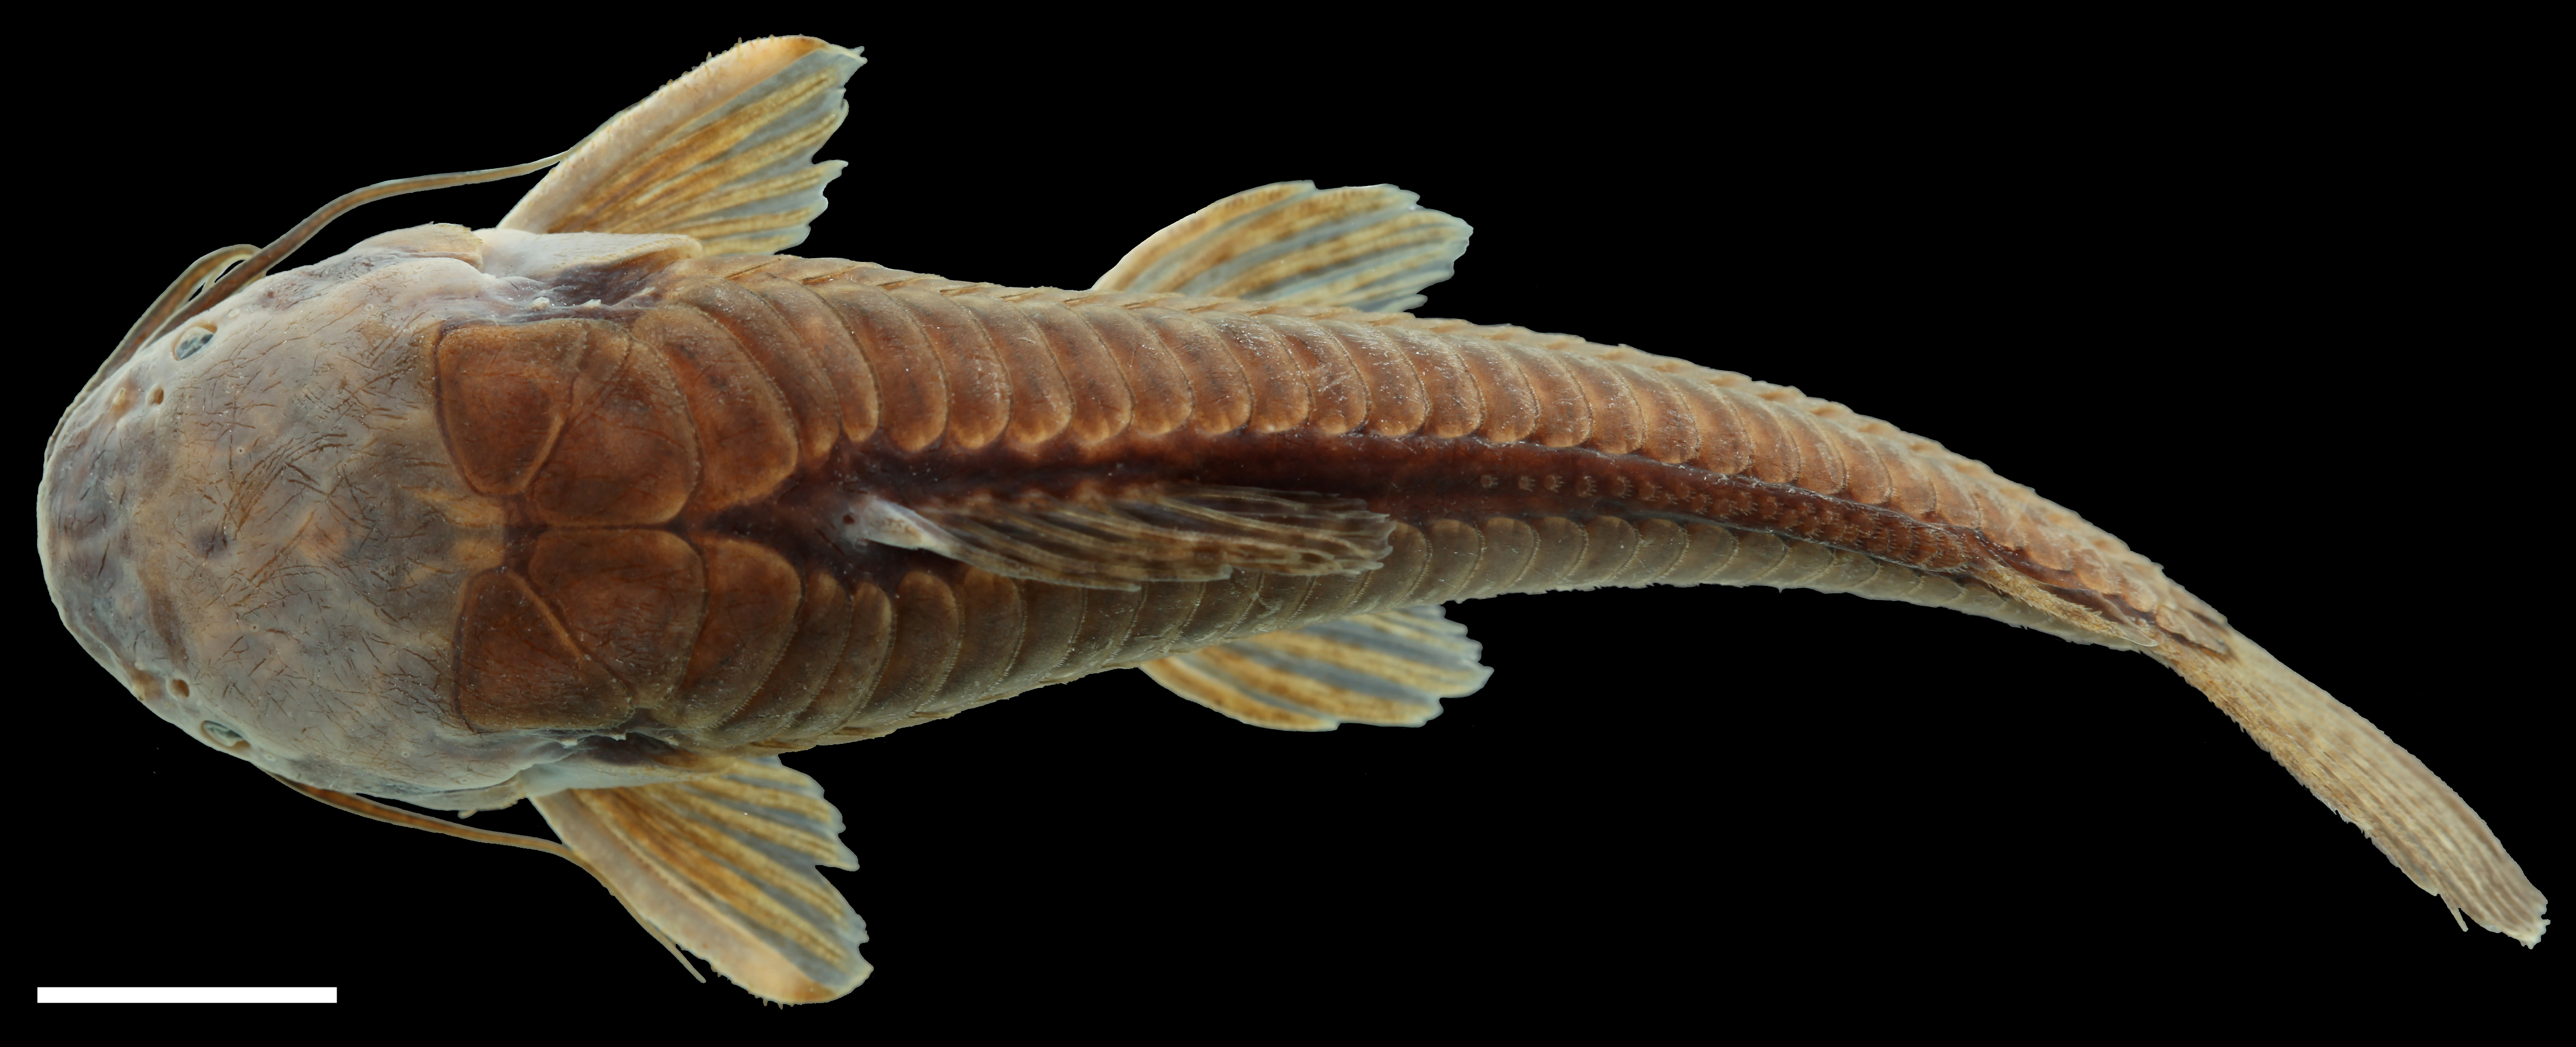 Paratype of <em>Callichthys oibaensis</em>, IAvH-P-5730_Dorsal, 72.8 mm SL (scale bar = 1 cm). Photograph by C. DoNascimiento